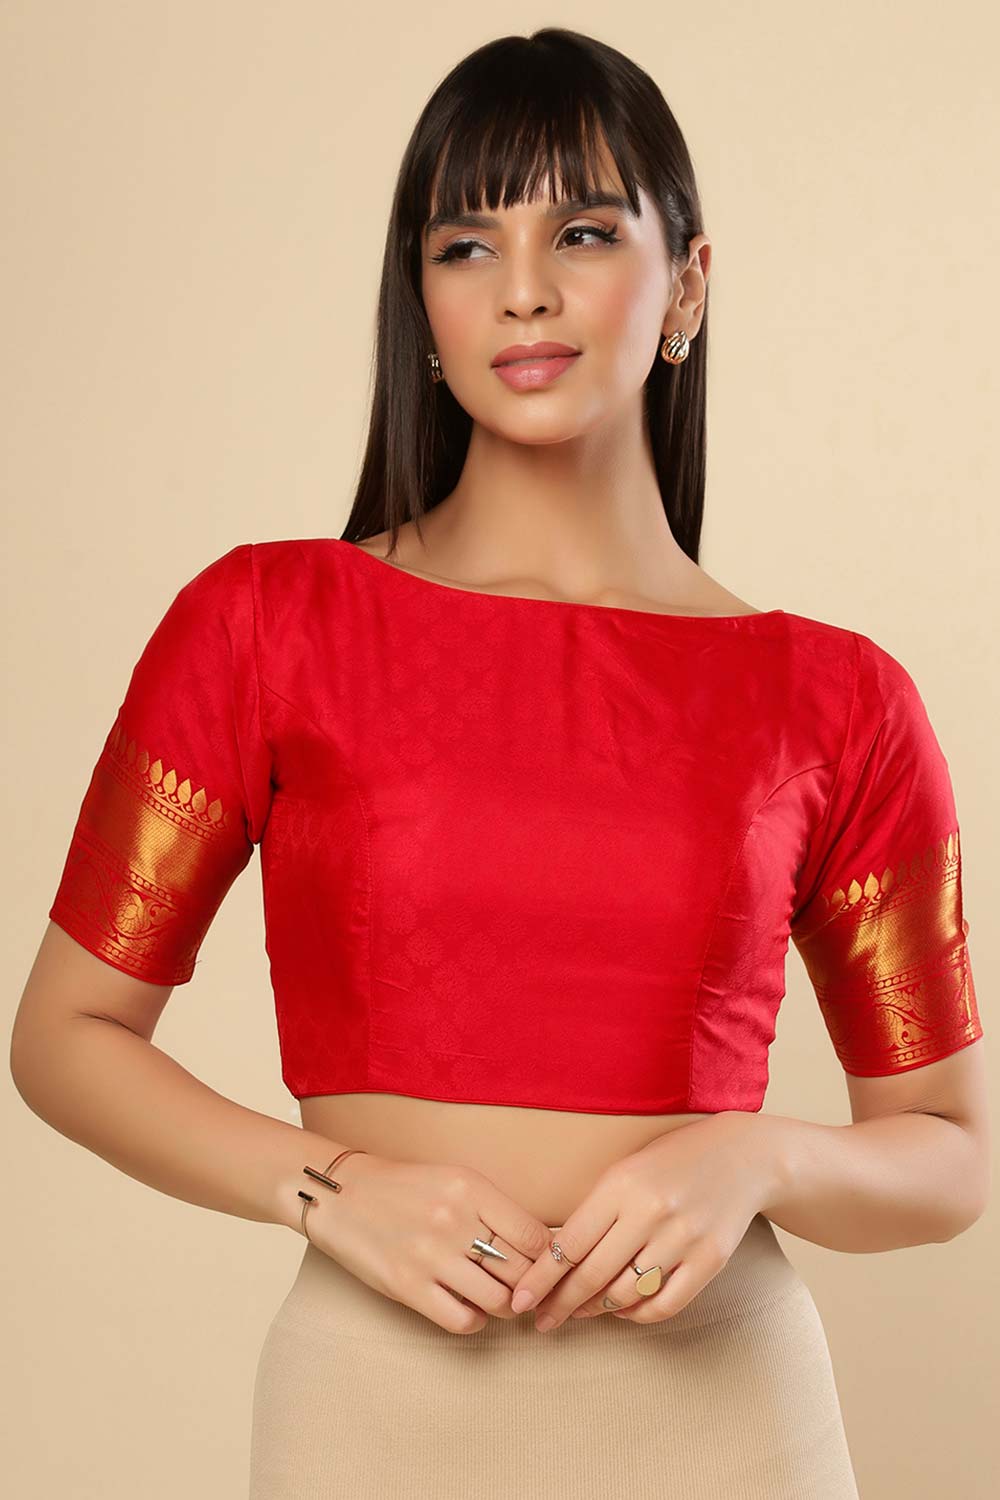 Silia Red Silk Blend Banarasi One Minute Saree